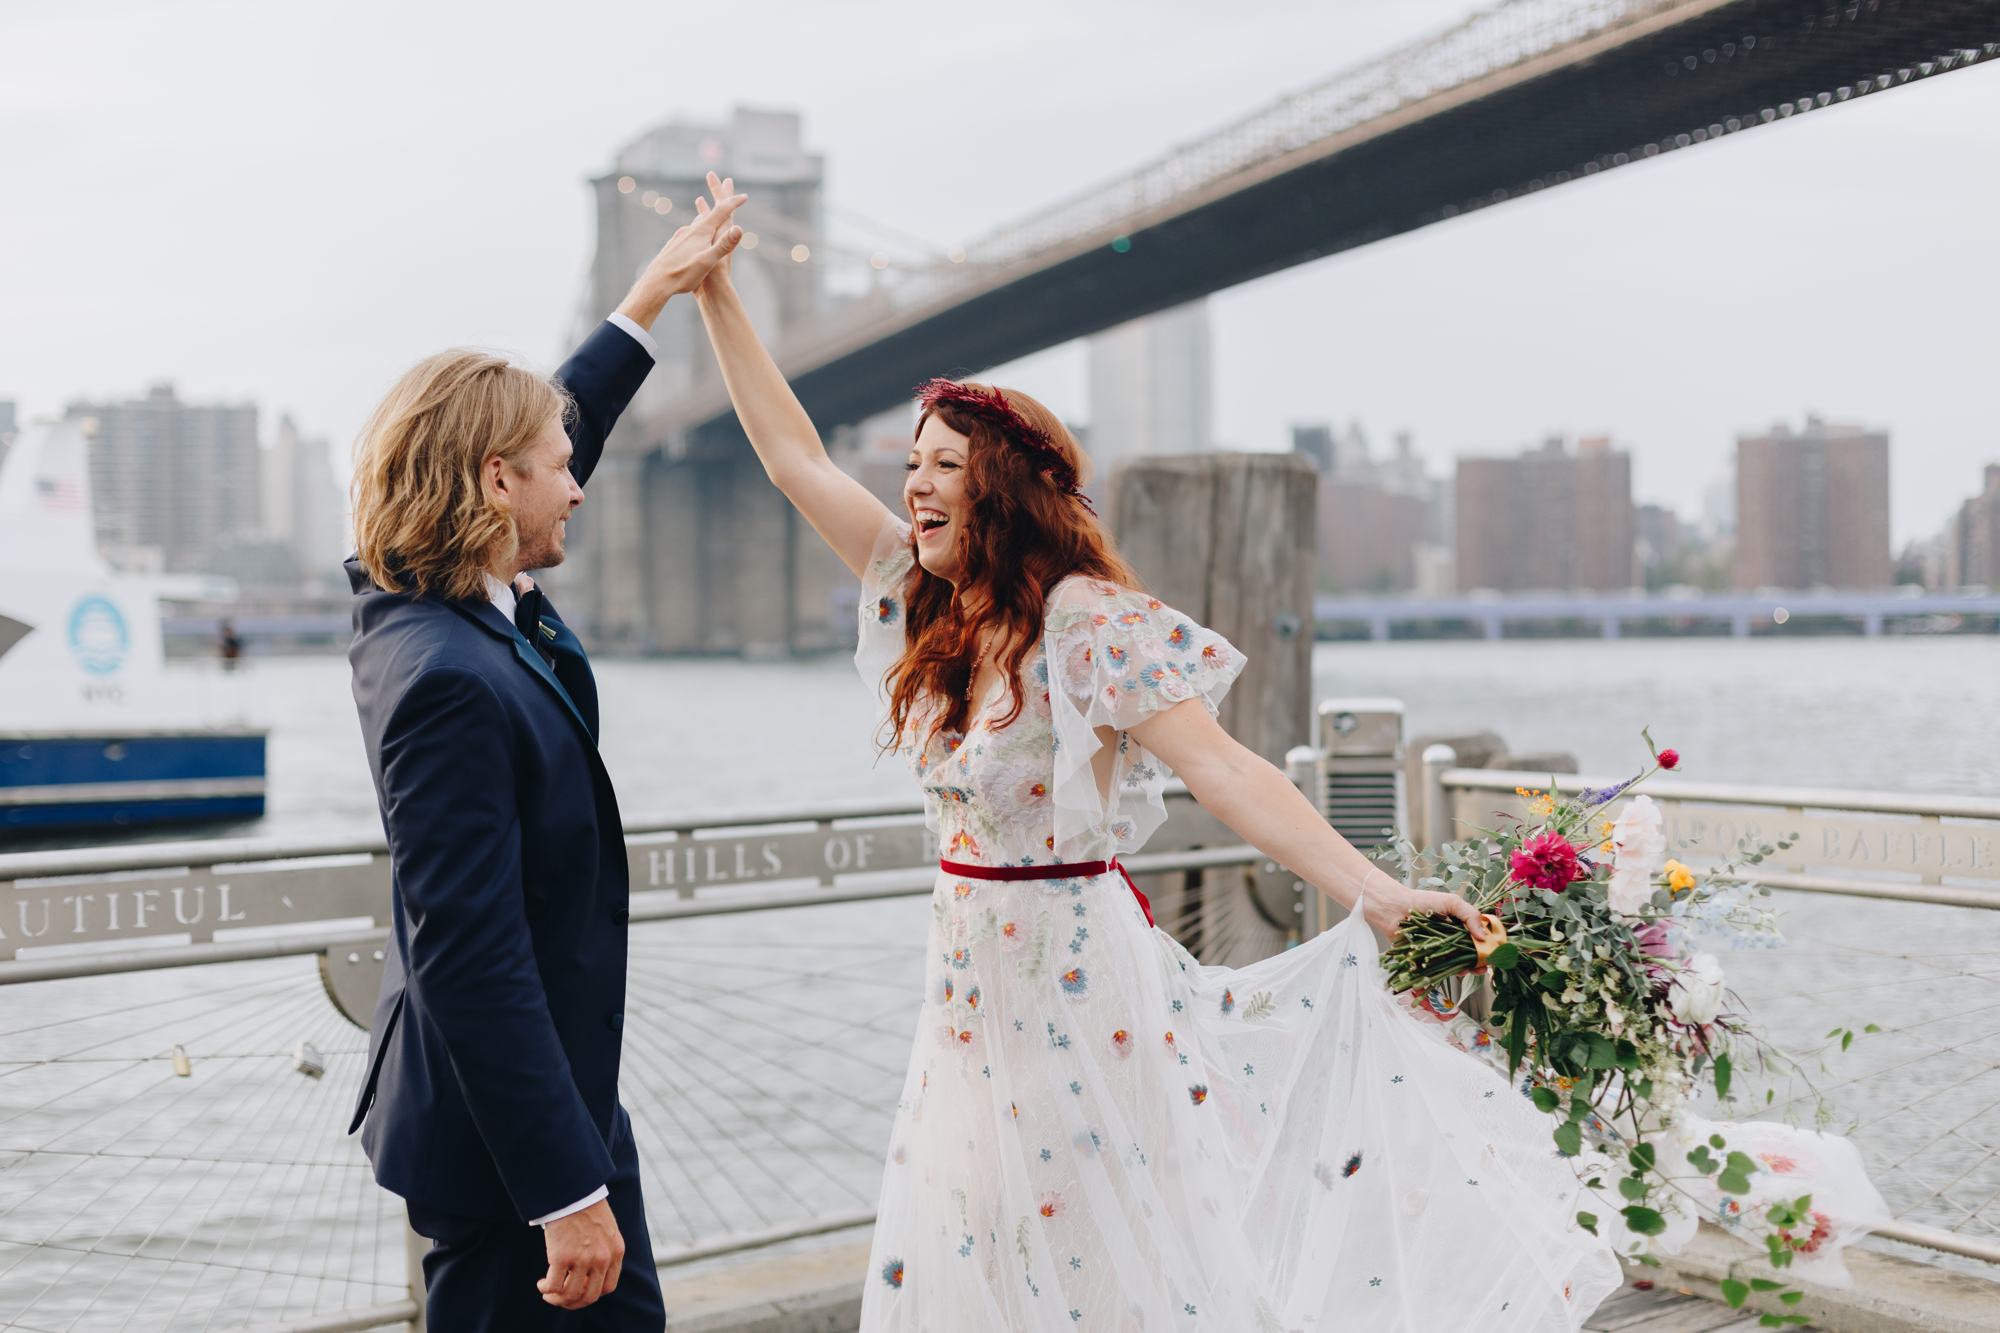 Brooklyn Bridge Park candid elopement photos